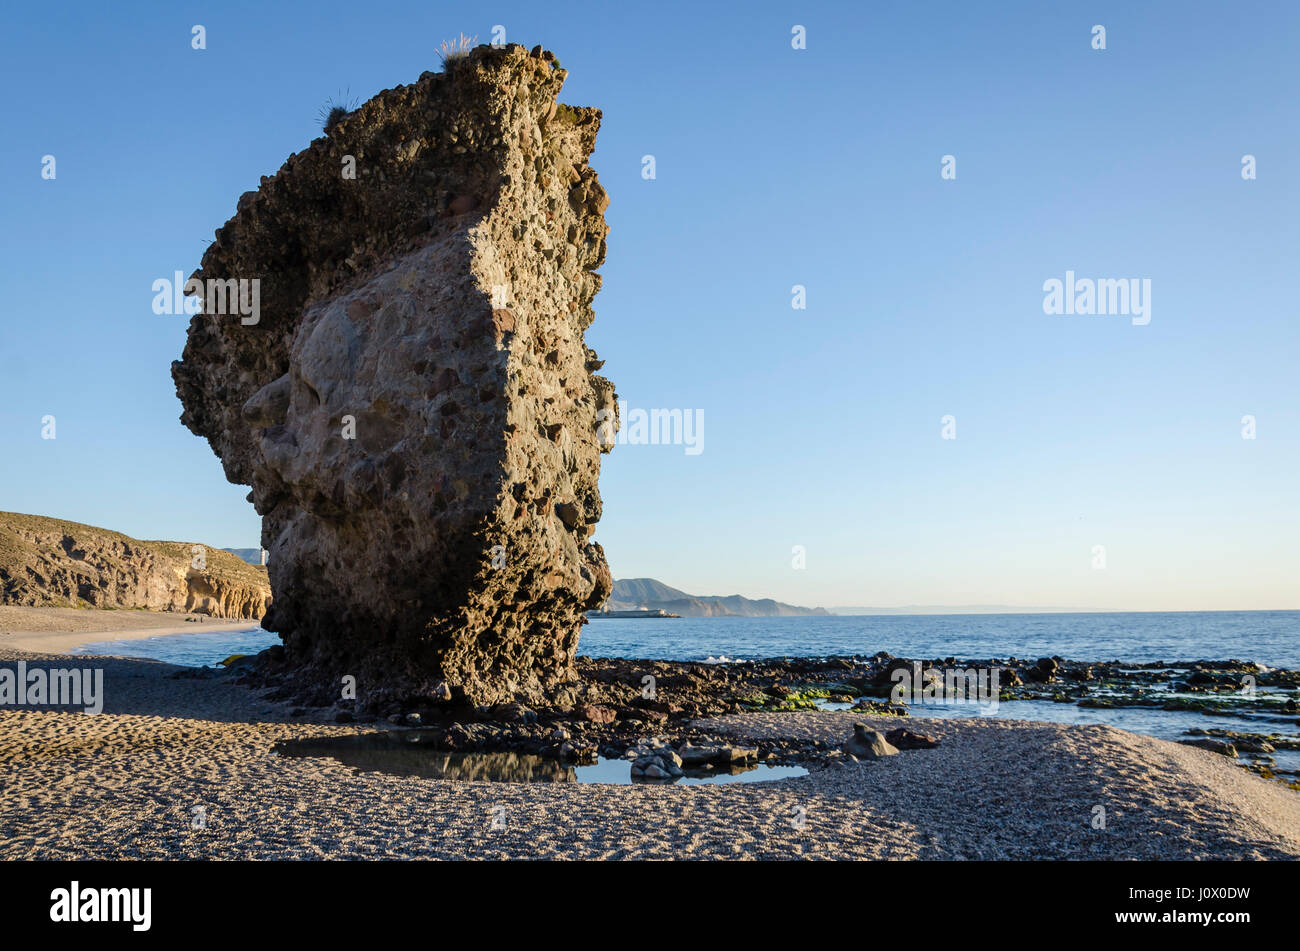 A view of a big rock in Dead beach, Almería province, Spain. Stock Photo